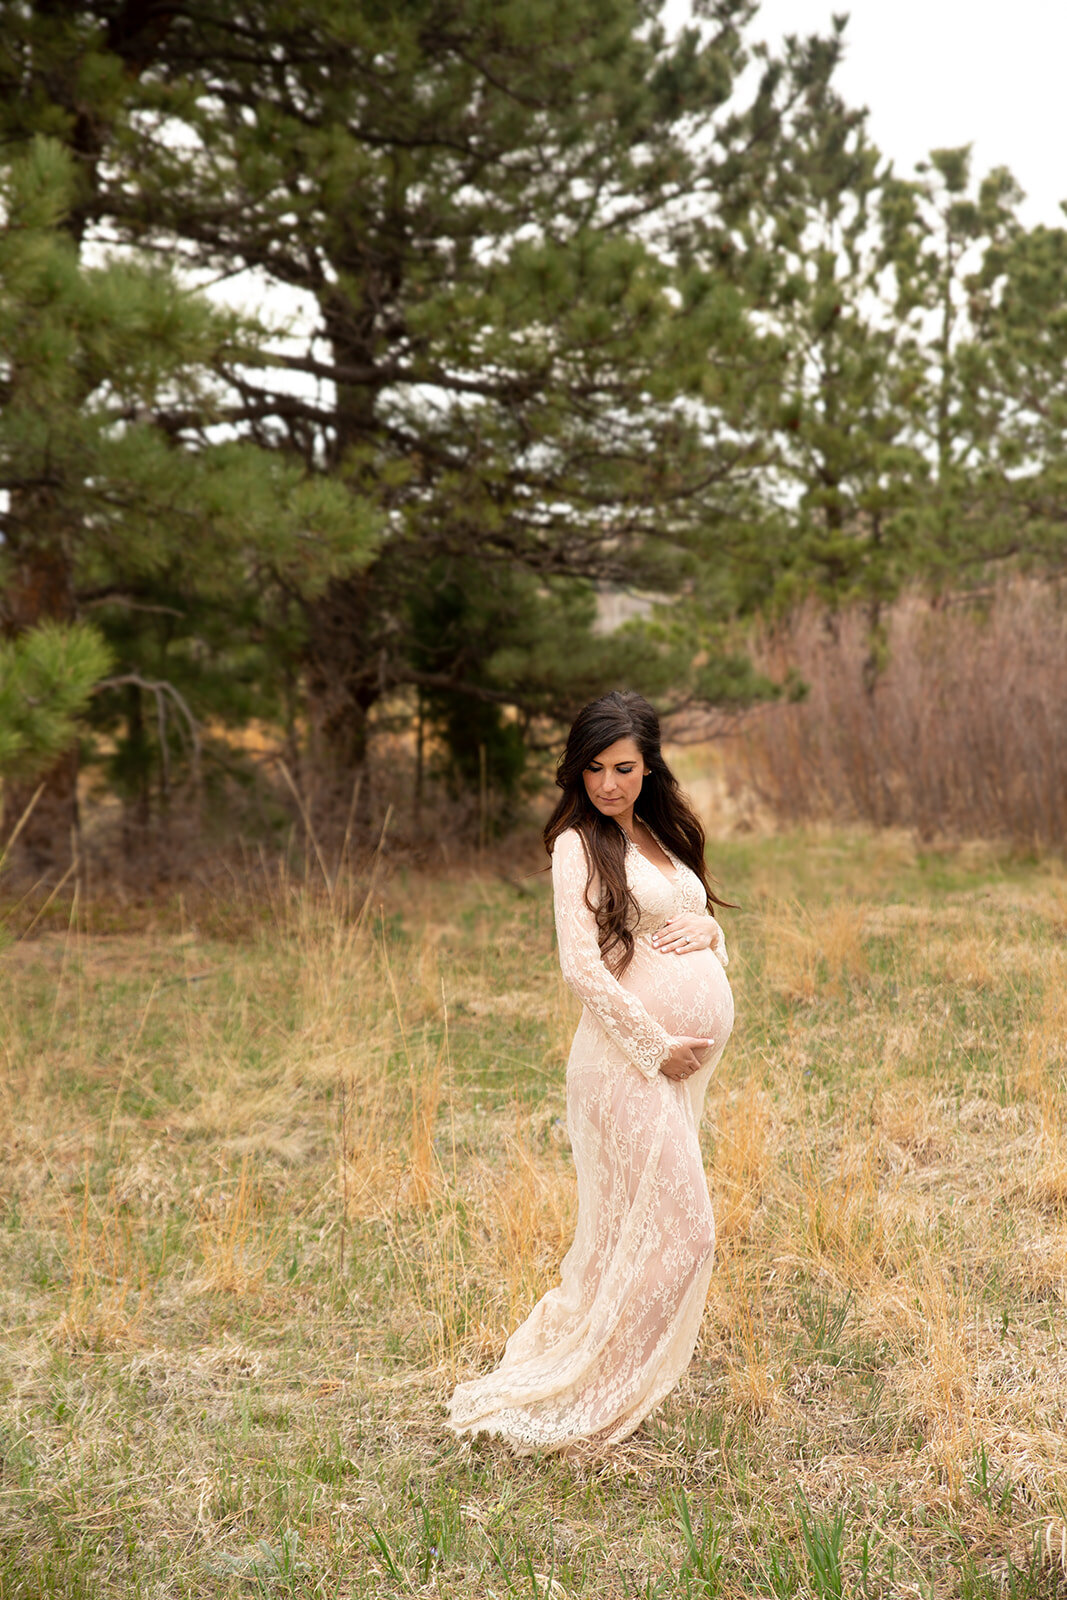 Mandy Penn Photogrpahy- Jenner Maternity 2020 (3 of 9)